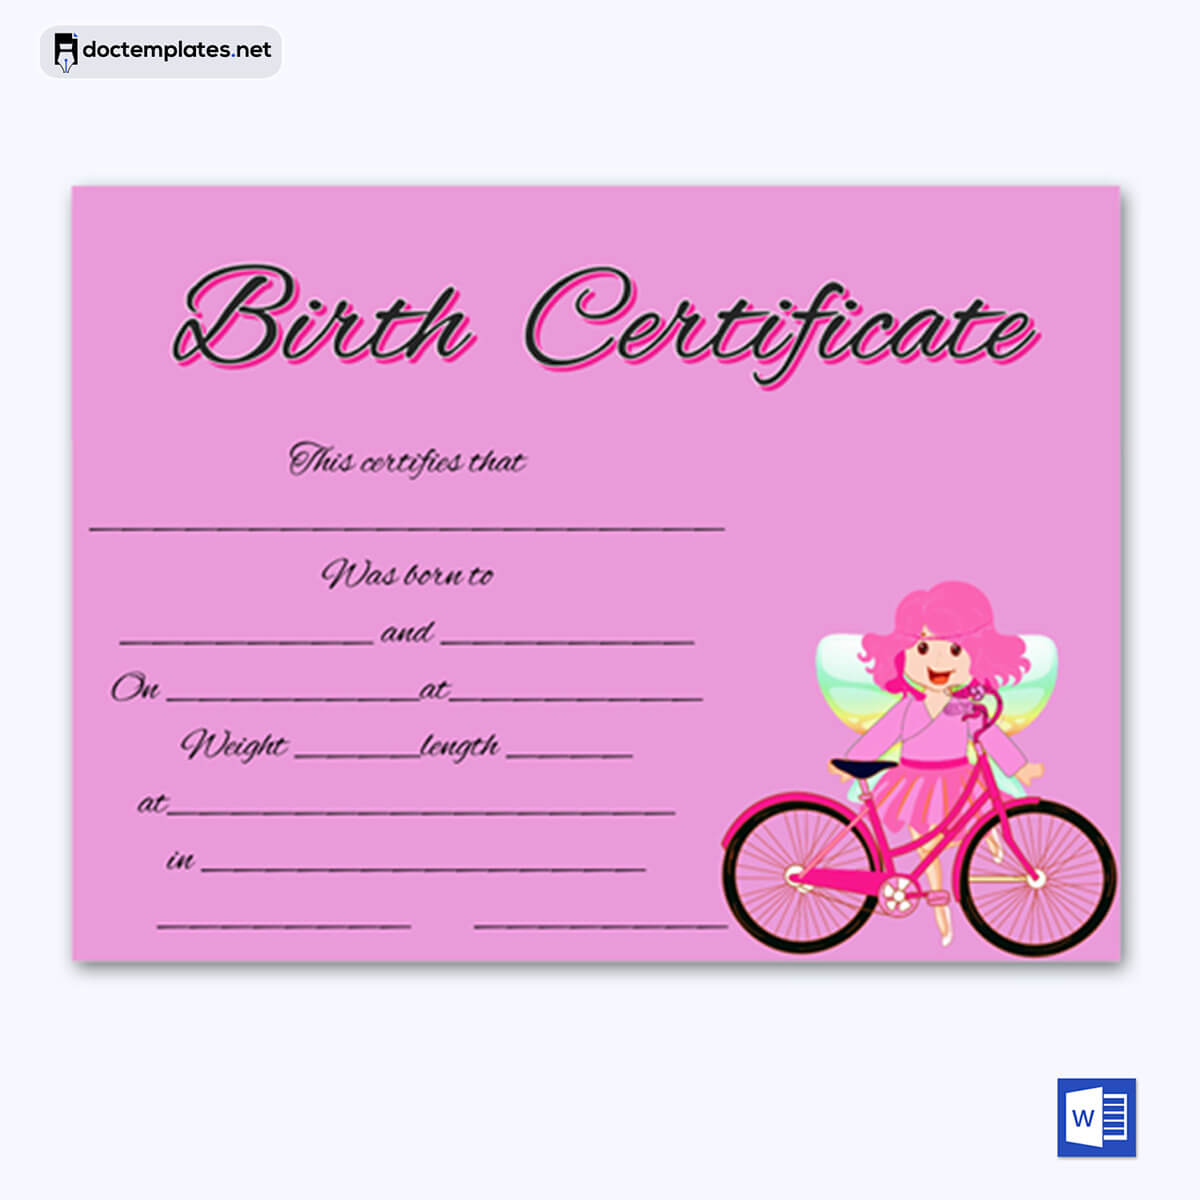 Image of Blank birth certificate PDF
Blank birth certificate PDF
08